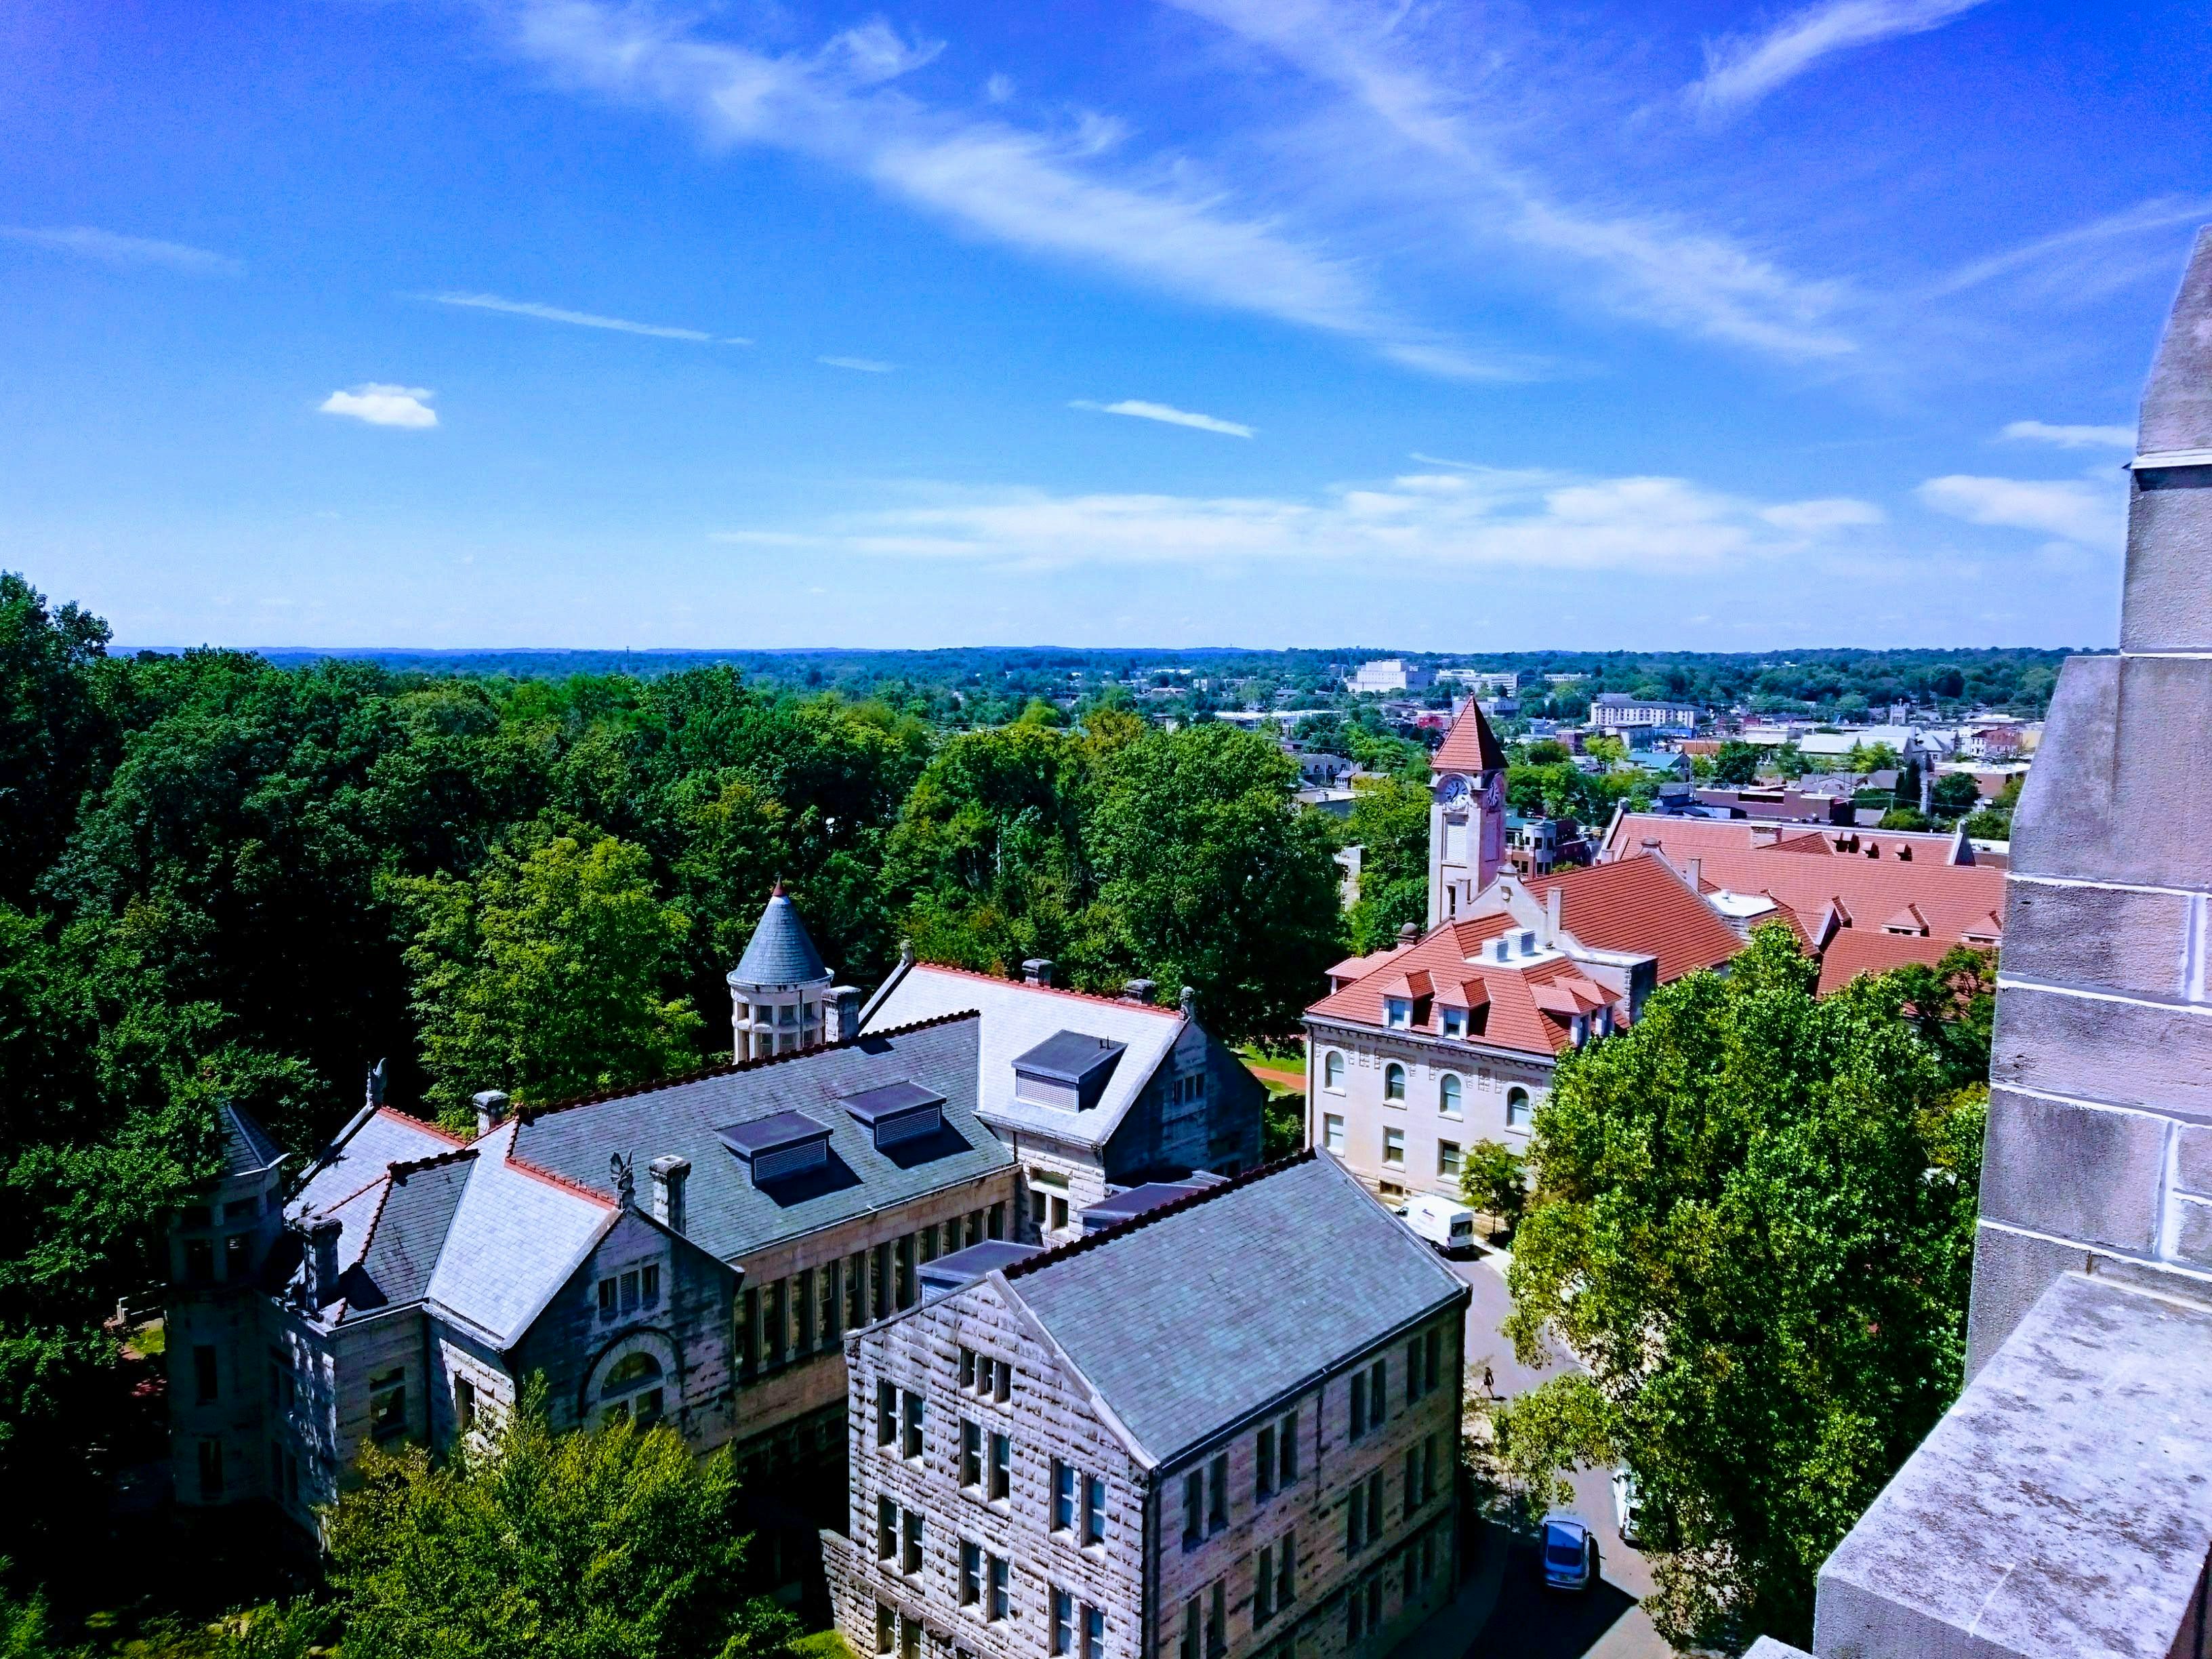 Indiana University--Bloomington - Profile, Rankings and Data